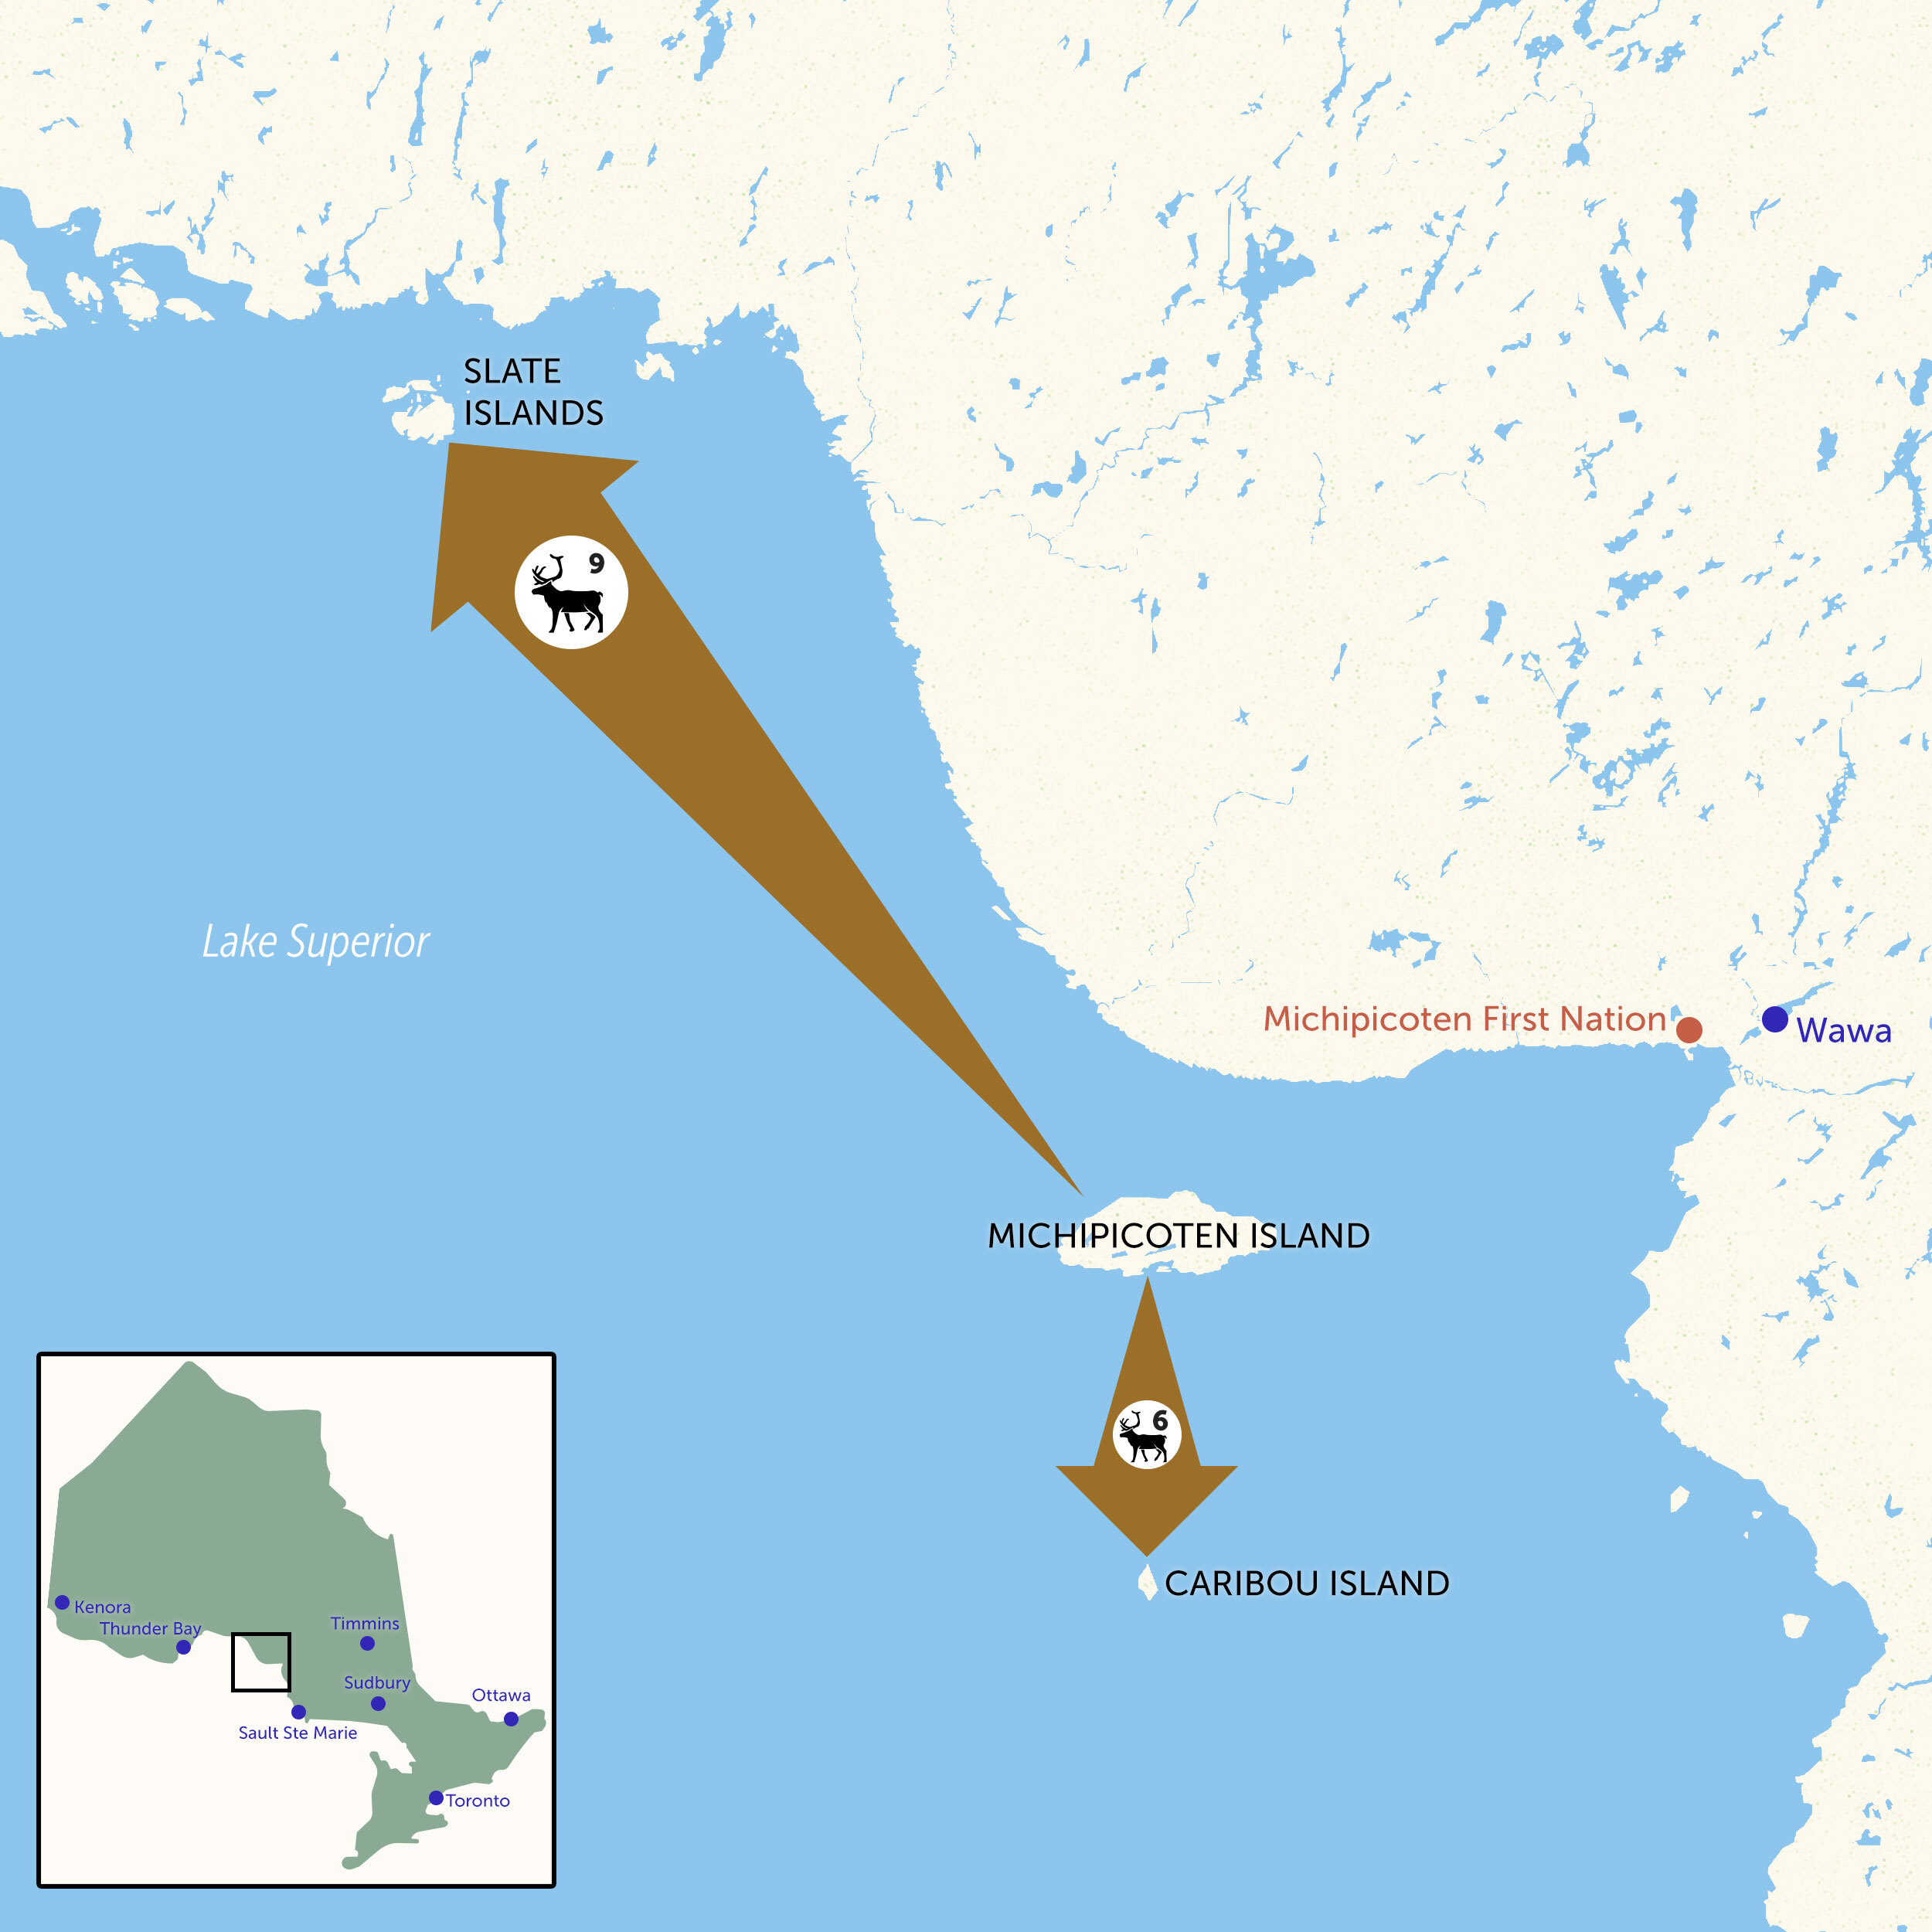 A map showing Michipicoten Island, the Slate Islands and Caribou Island